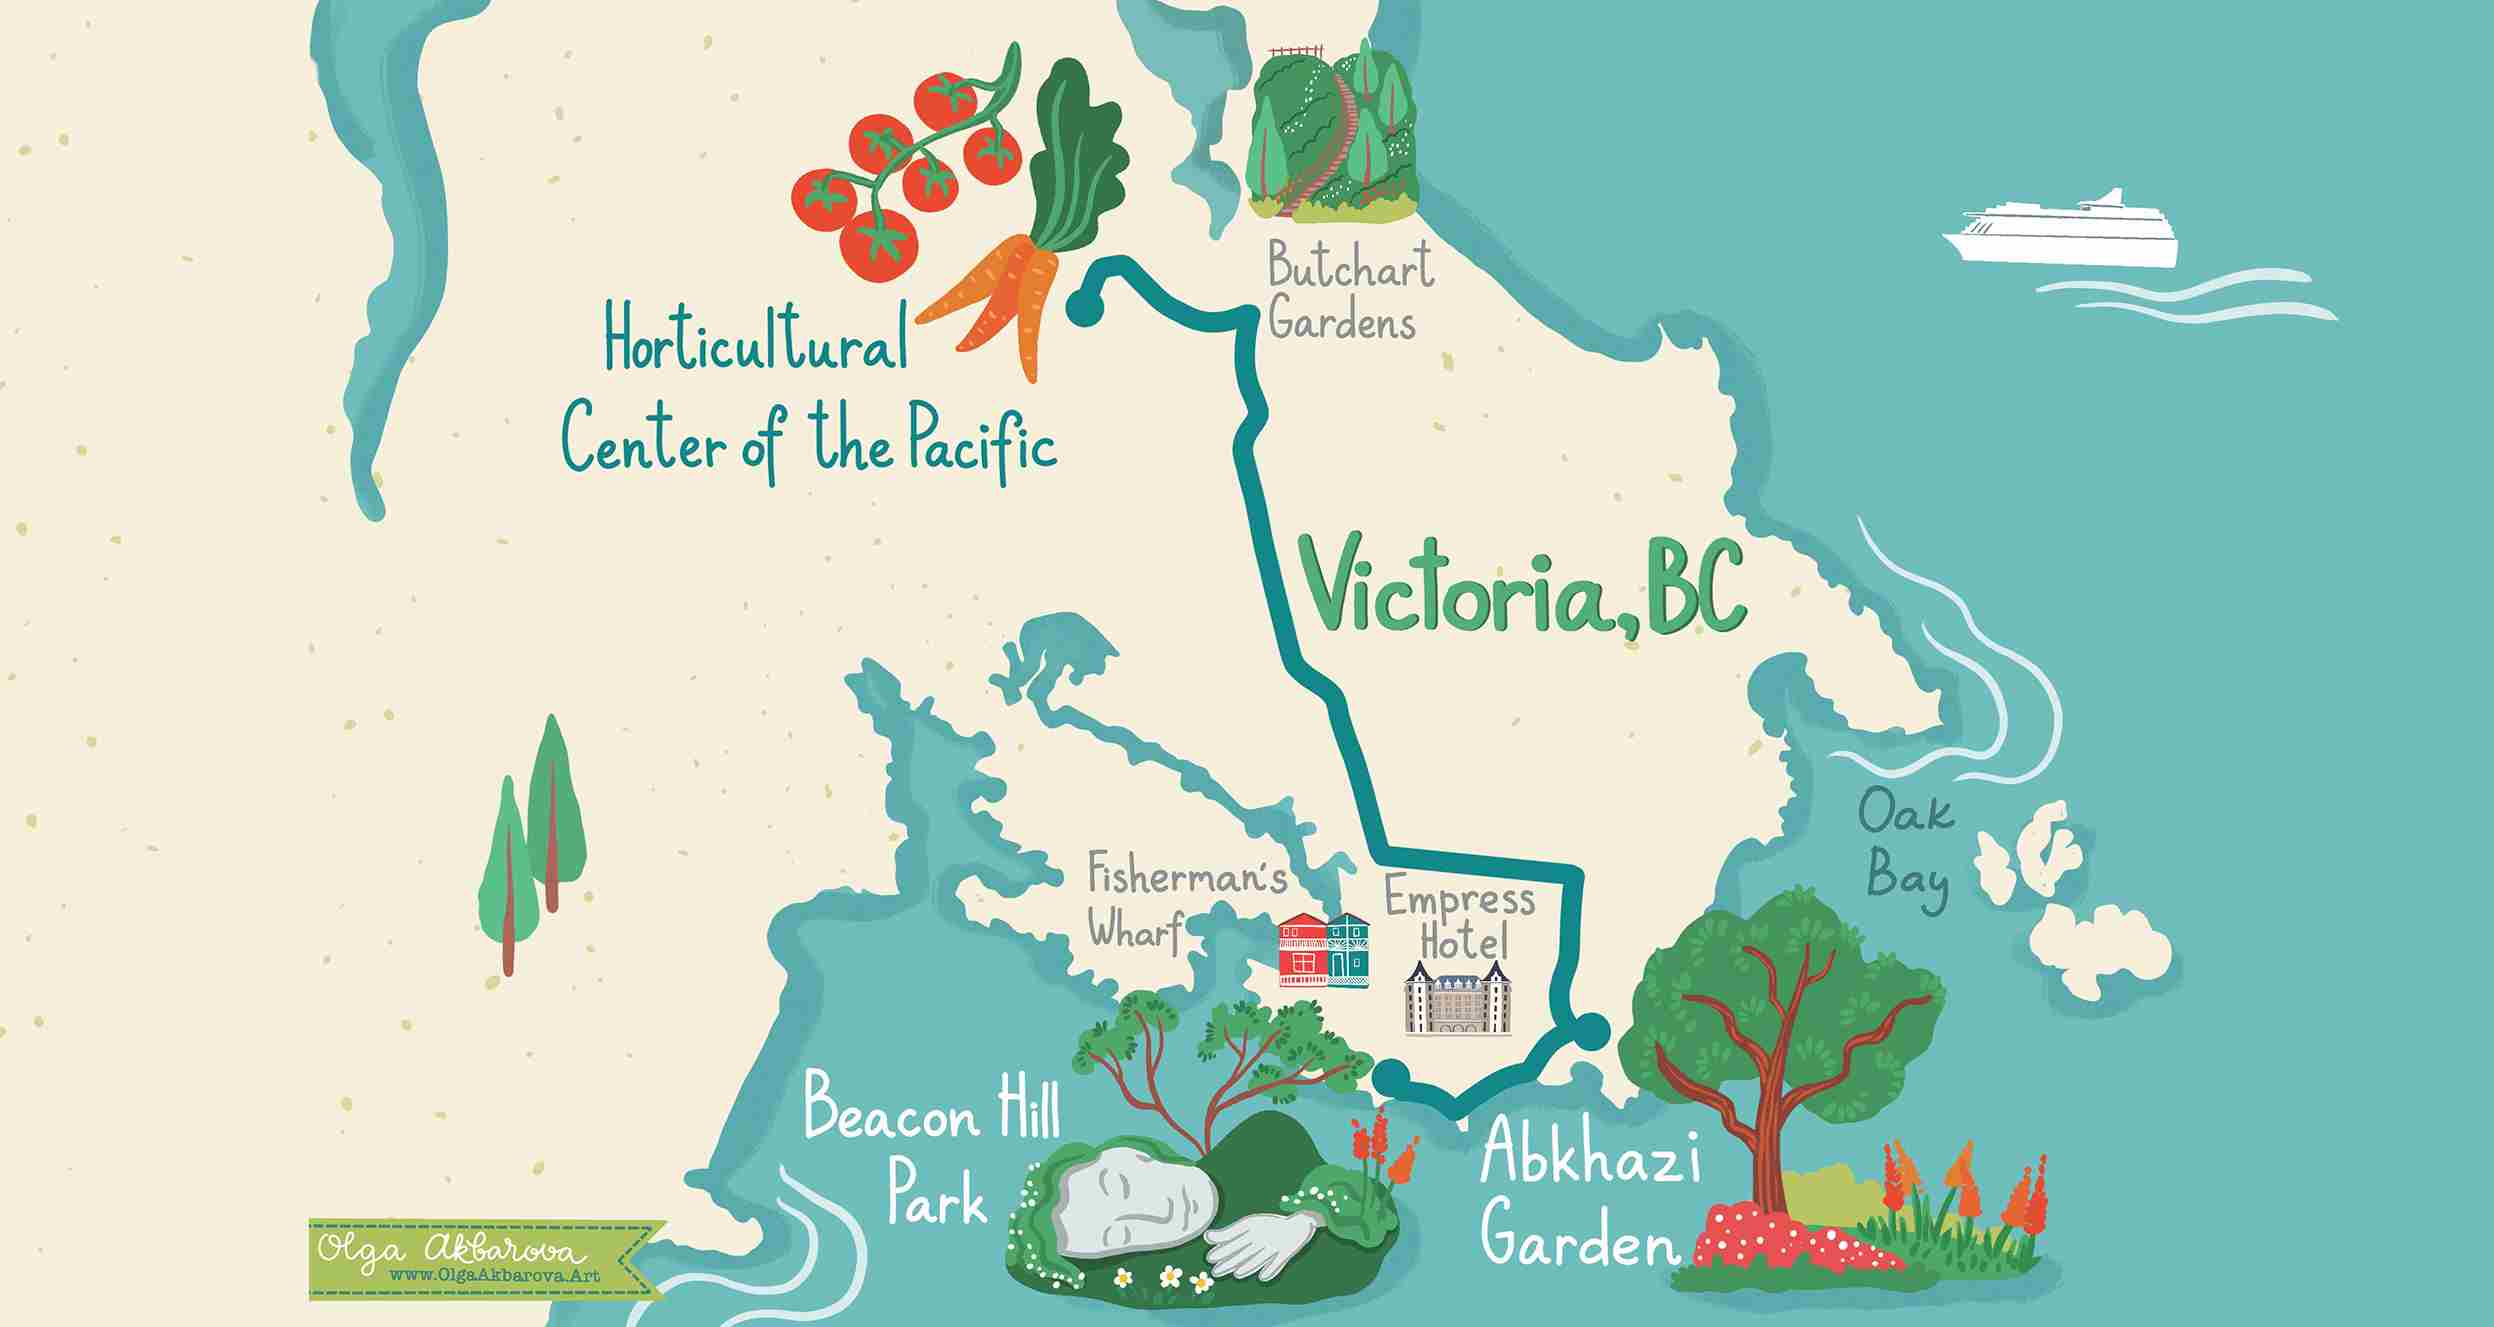 Victoria Gardens Directory & Map